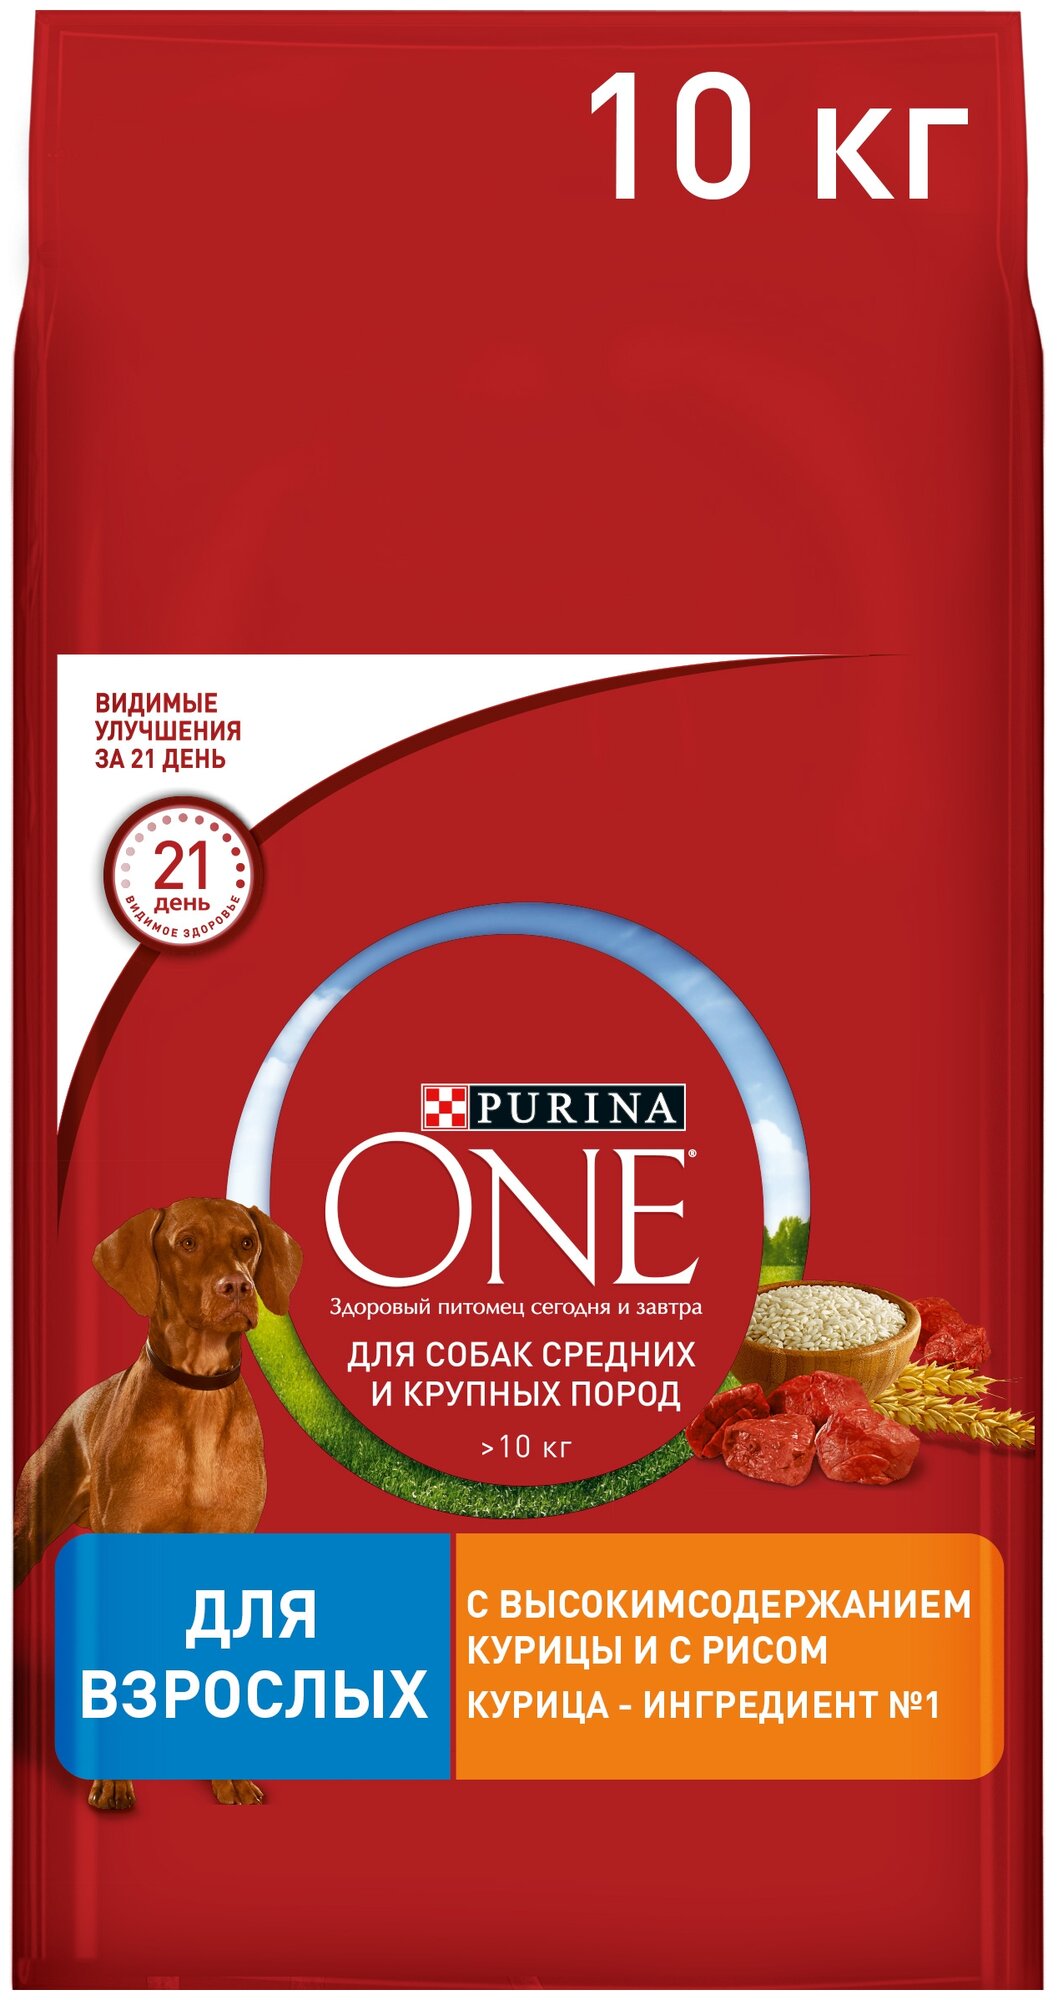 Сухой корм Purinа One medium/maxi для взрослых собак, курица/рис, 10 кг